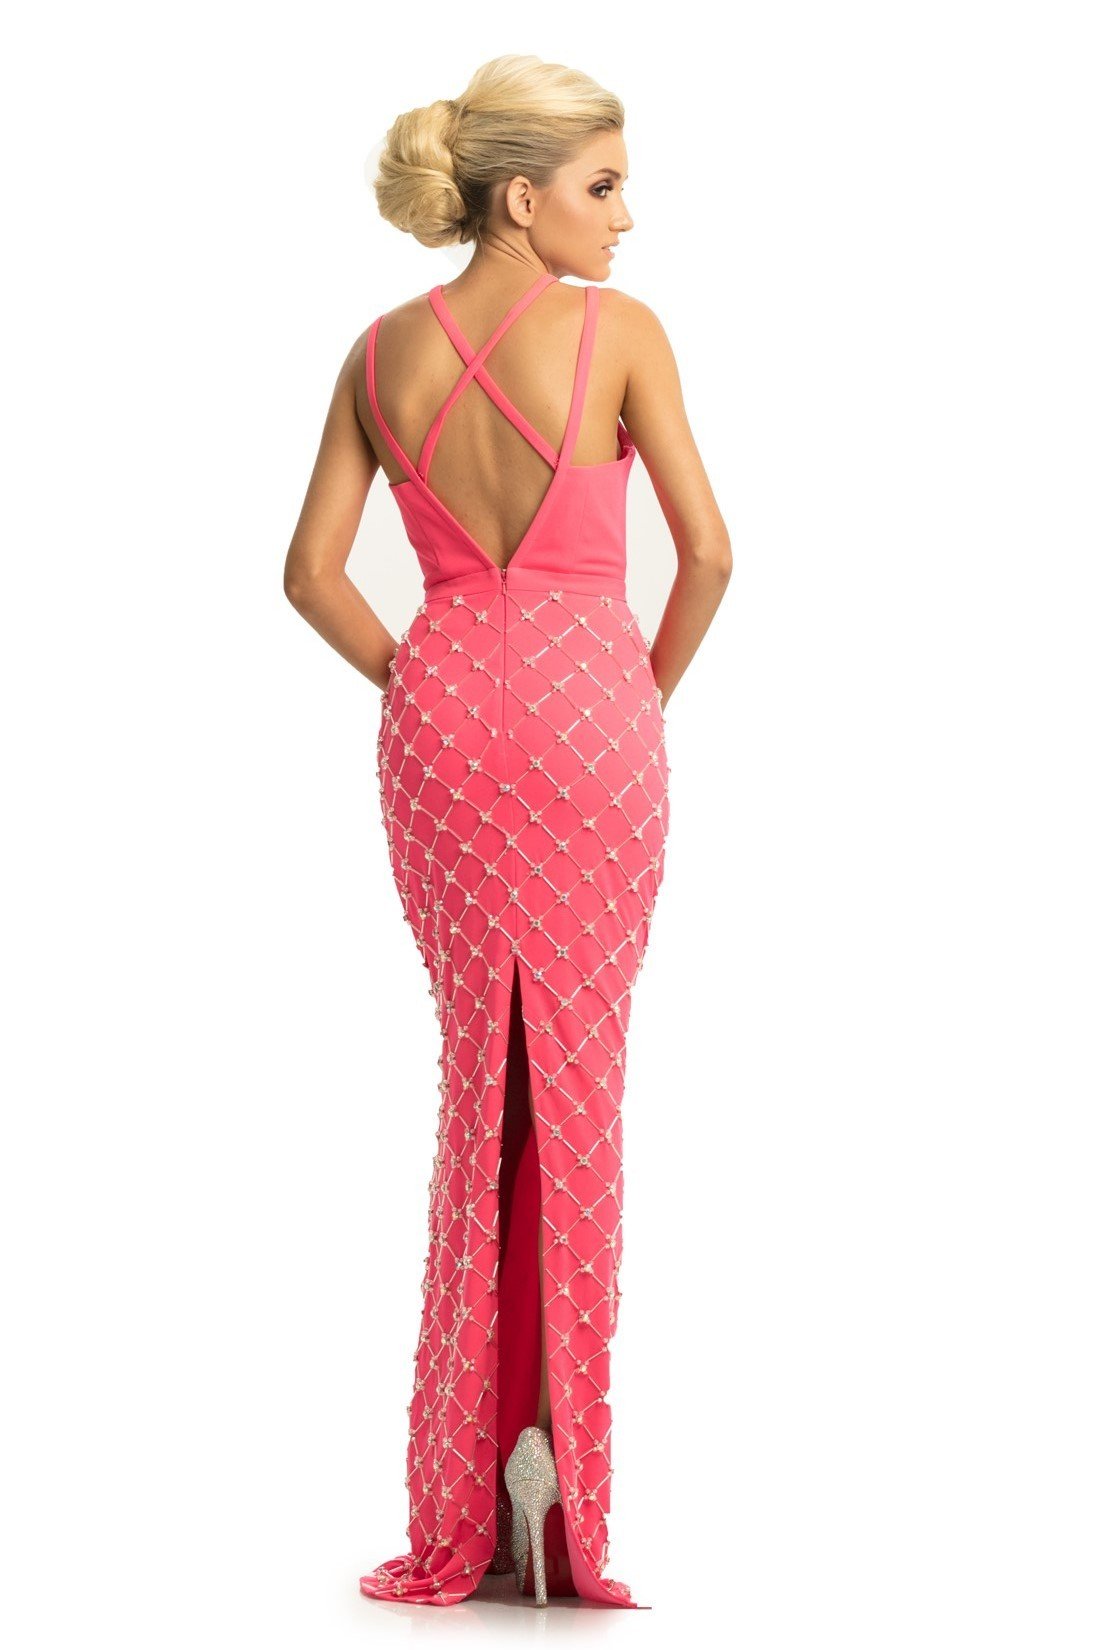 Johnathan Kayne - 9064 Beaded Sheath Dress With Back Slit In Pink